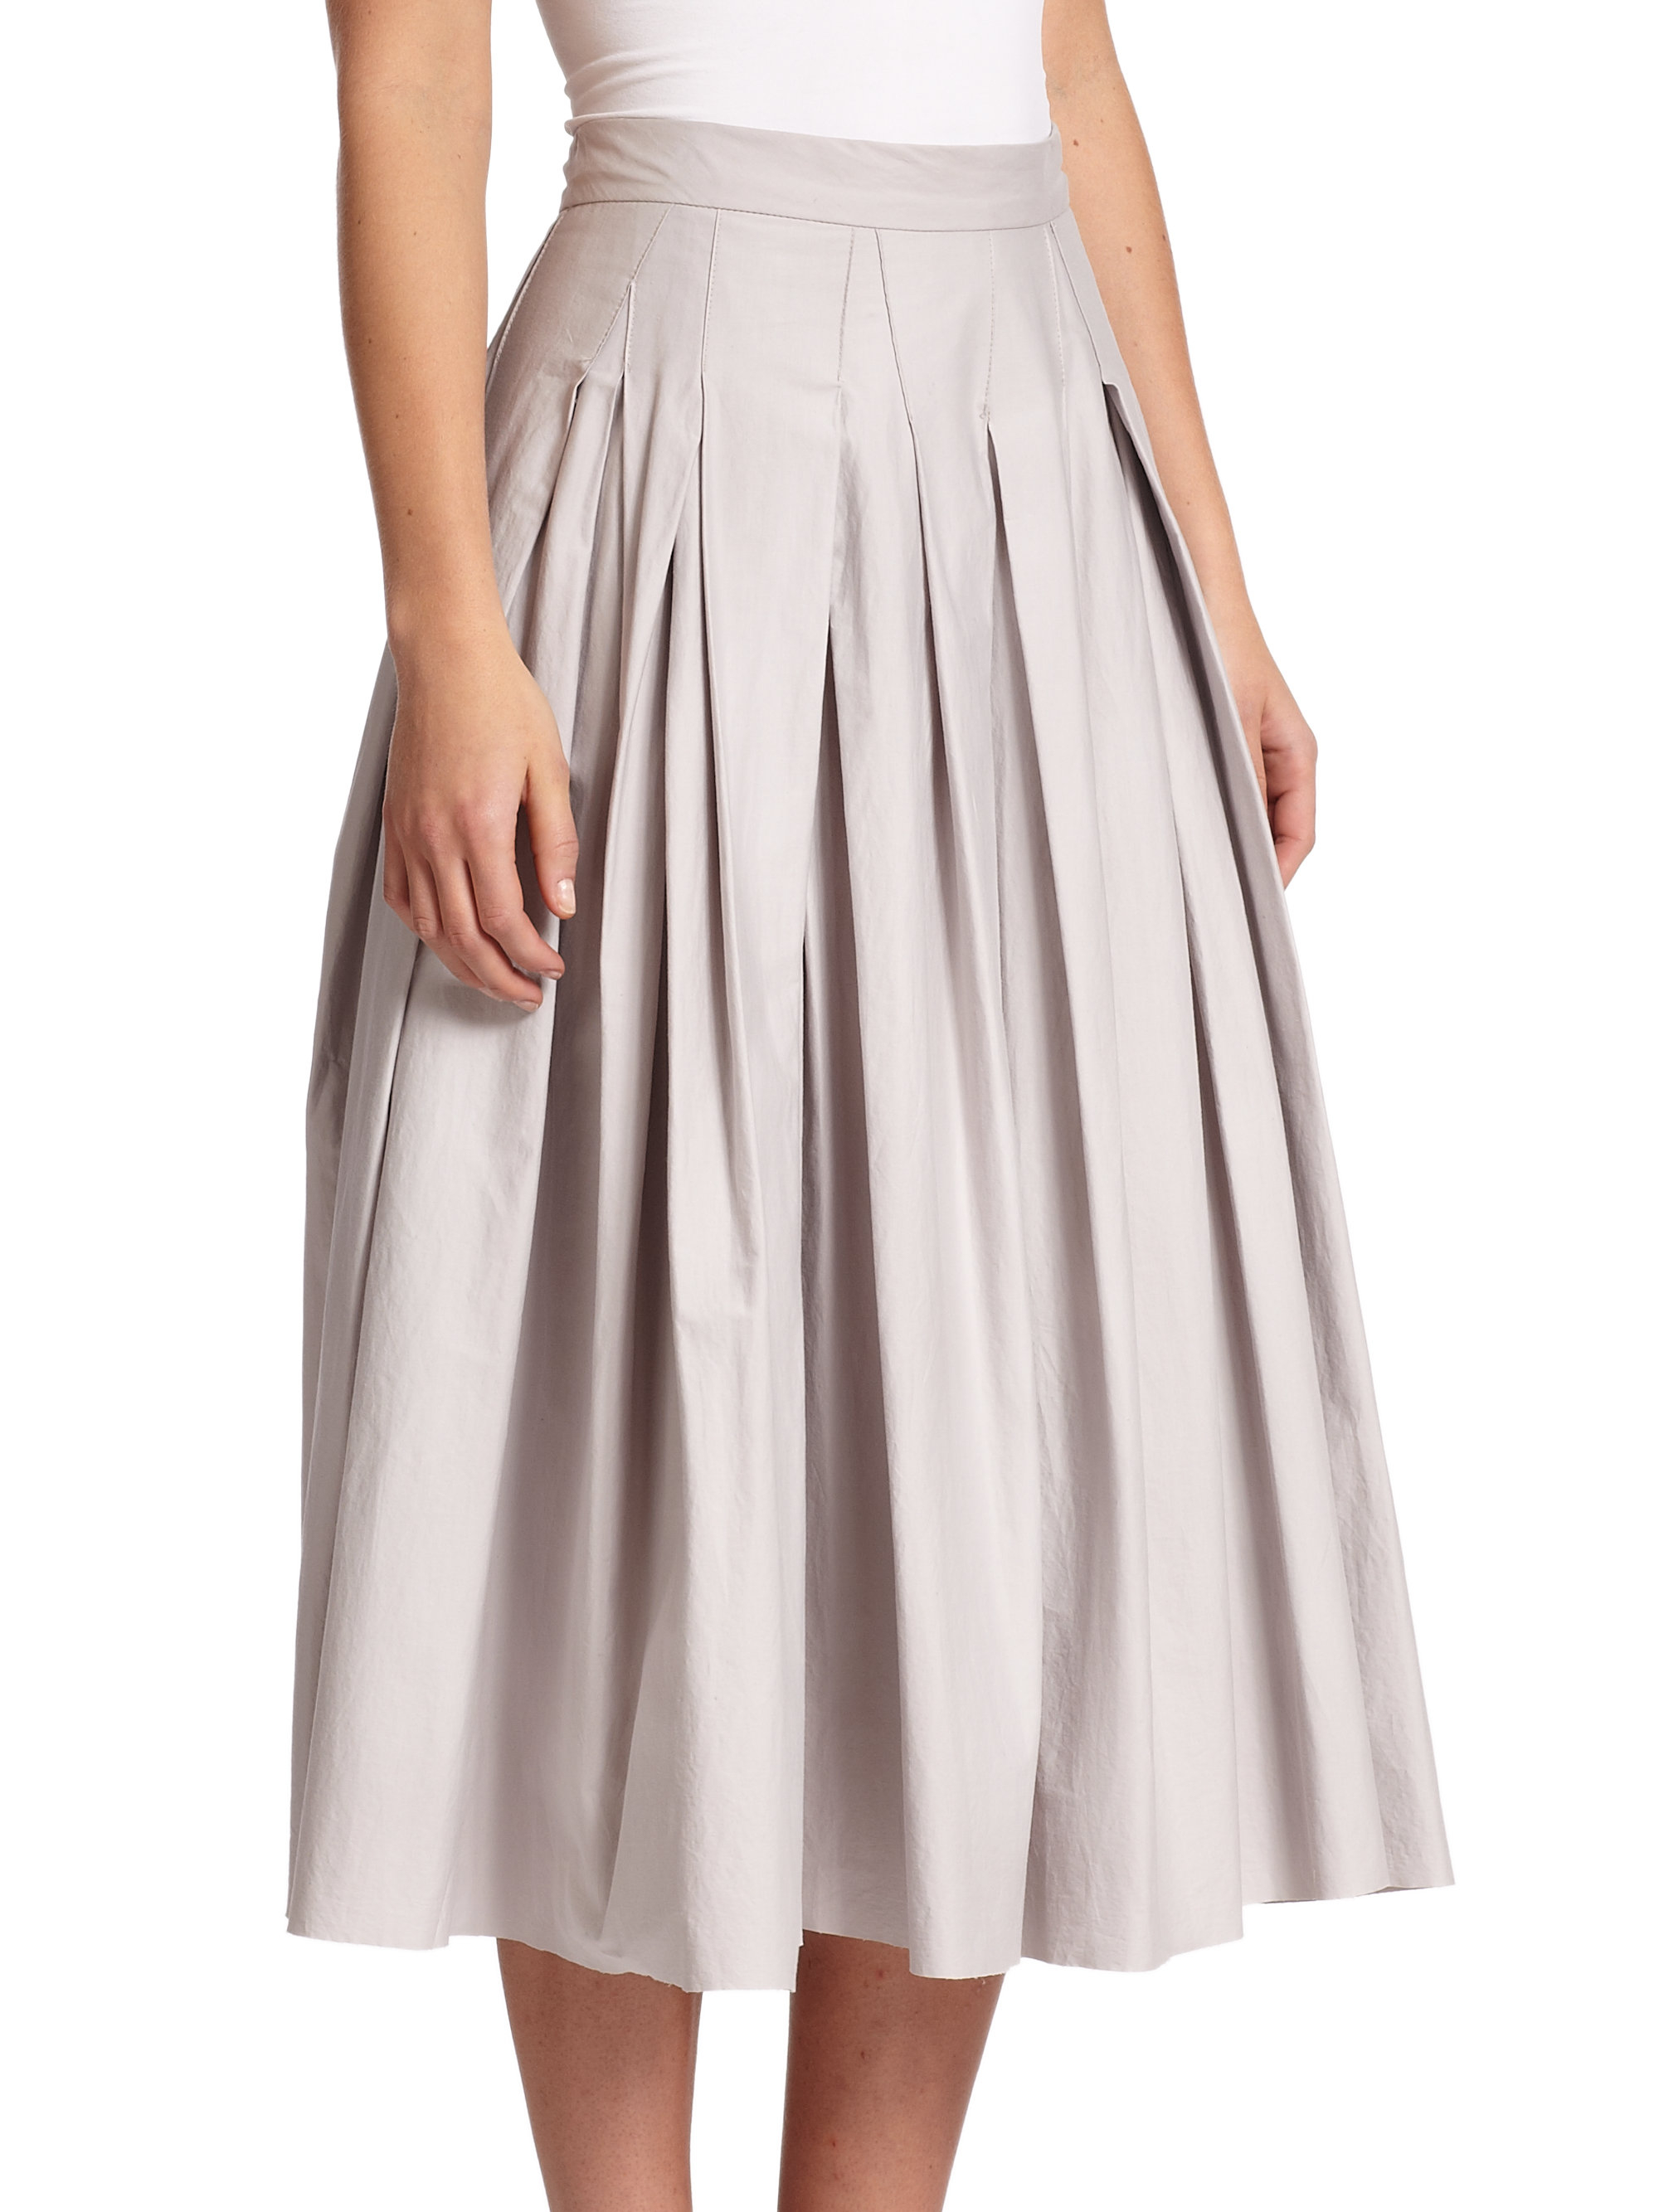 Lyst - Dkny Cotton Poplin Pleated Skirt in Gray